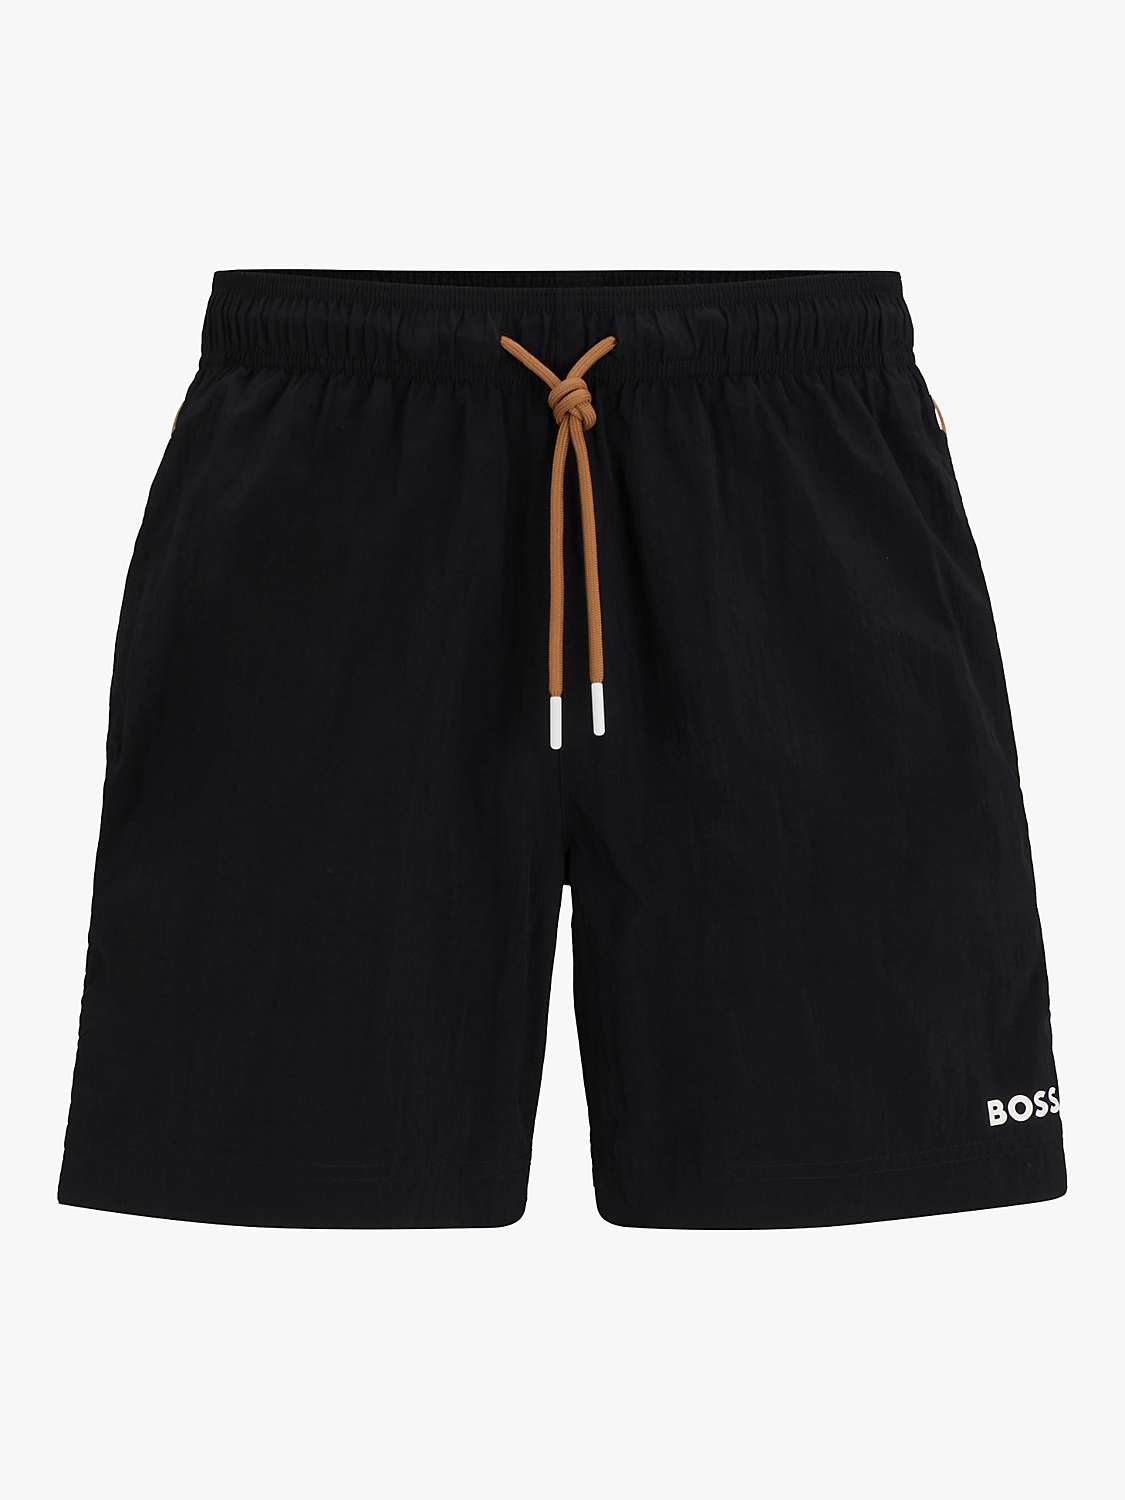 Buy BOSS Tune 007 Swim Shorts, Black Online at johnlewis.com